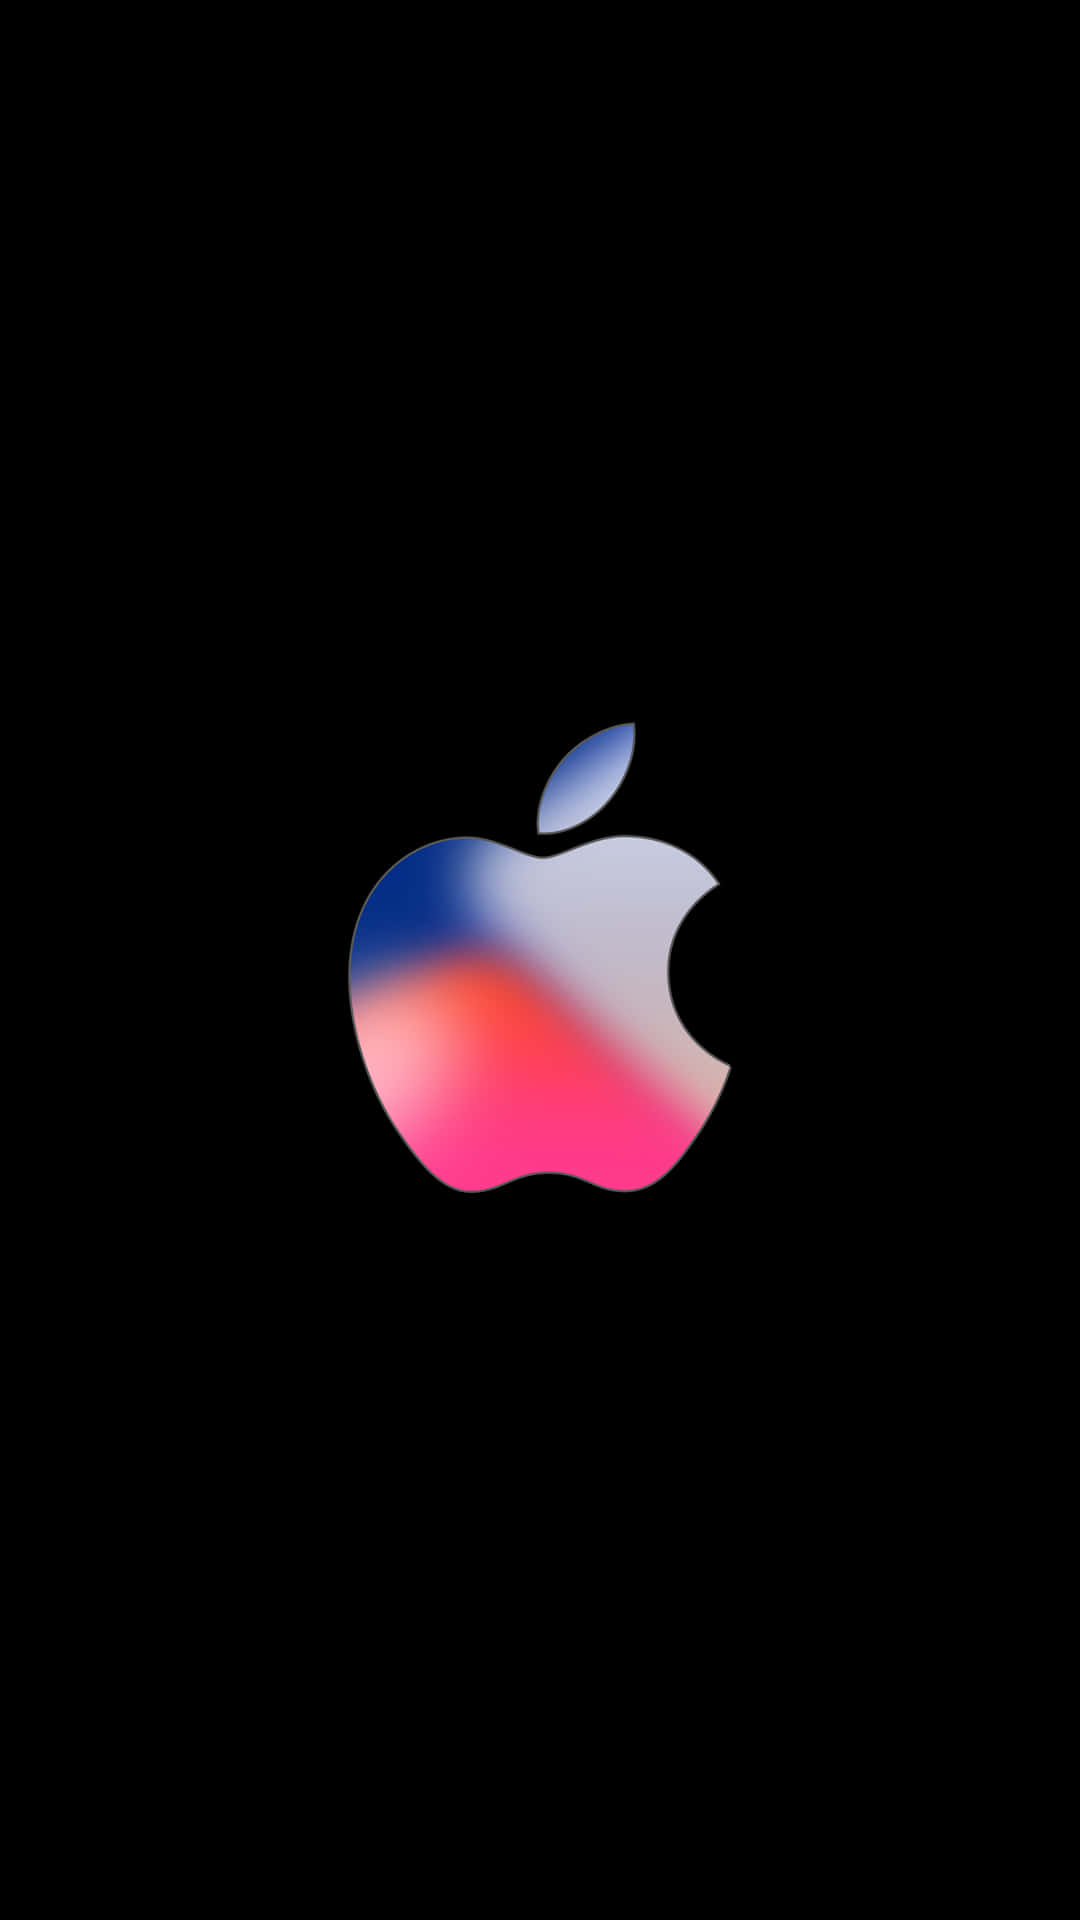 Apple Logo On A Black Background